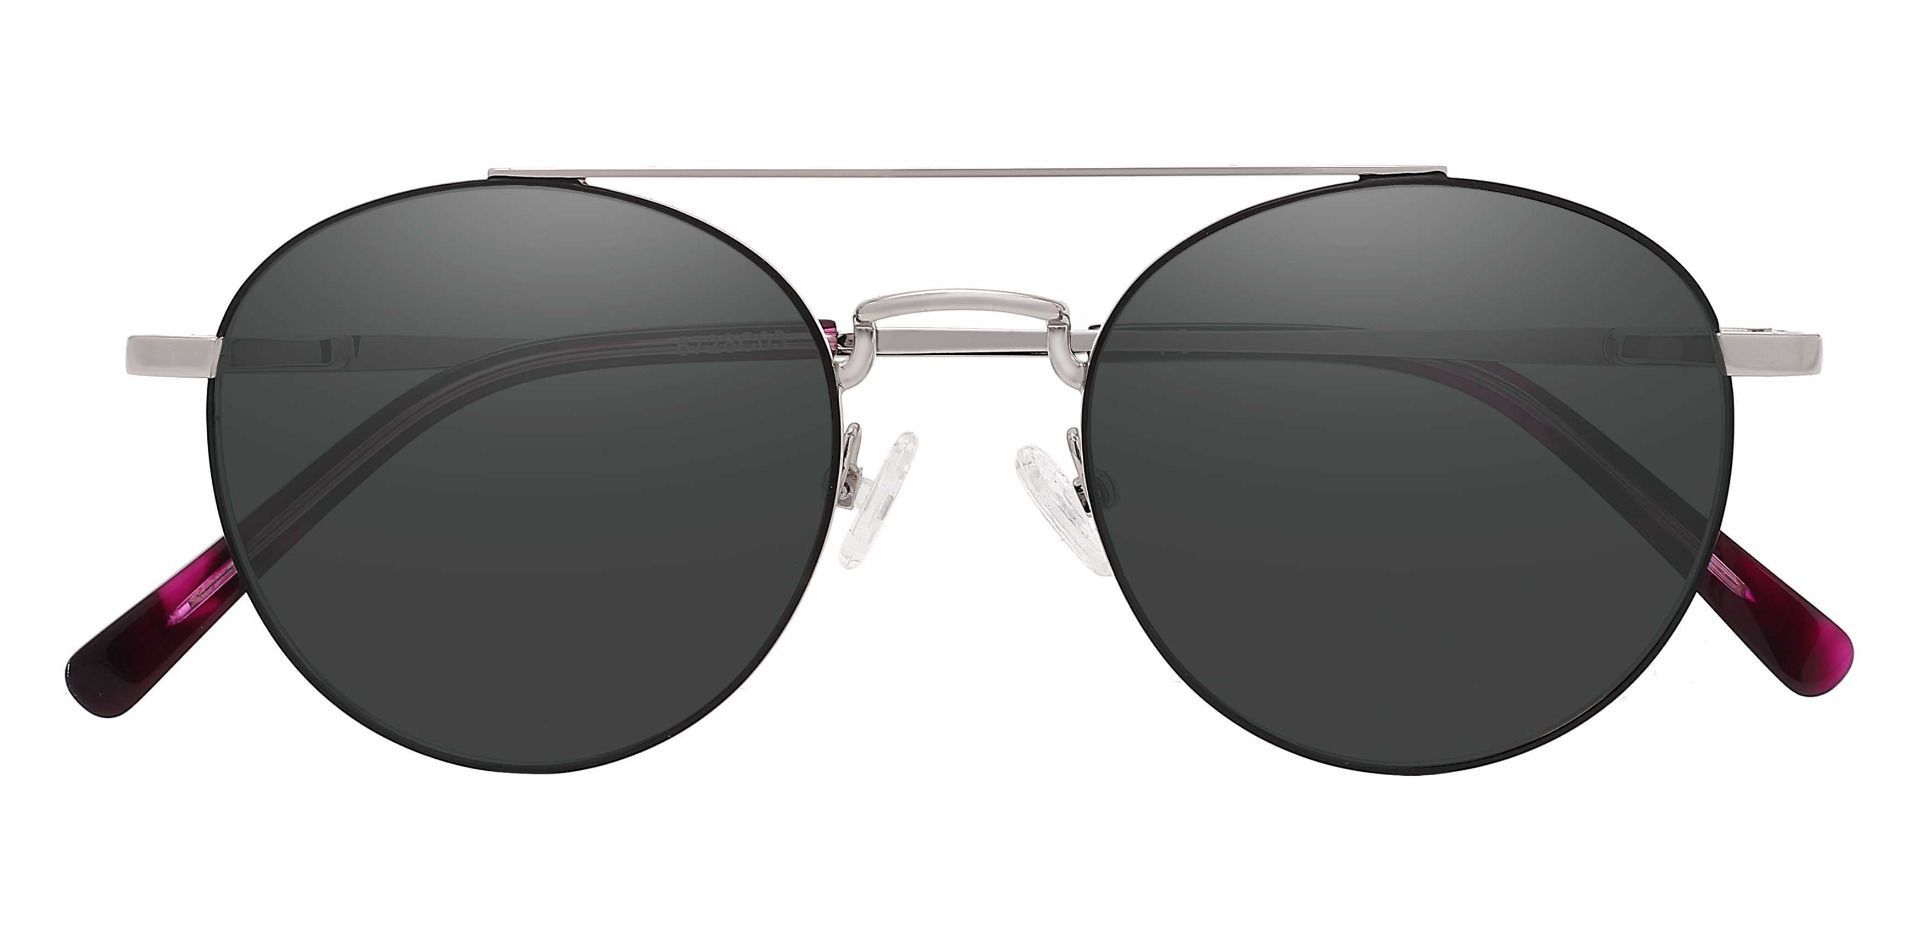 Tasha Aviator Non-Rx Sunglasses - Silver Frame With Gray Lenses